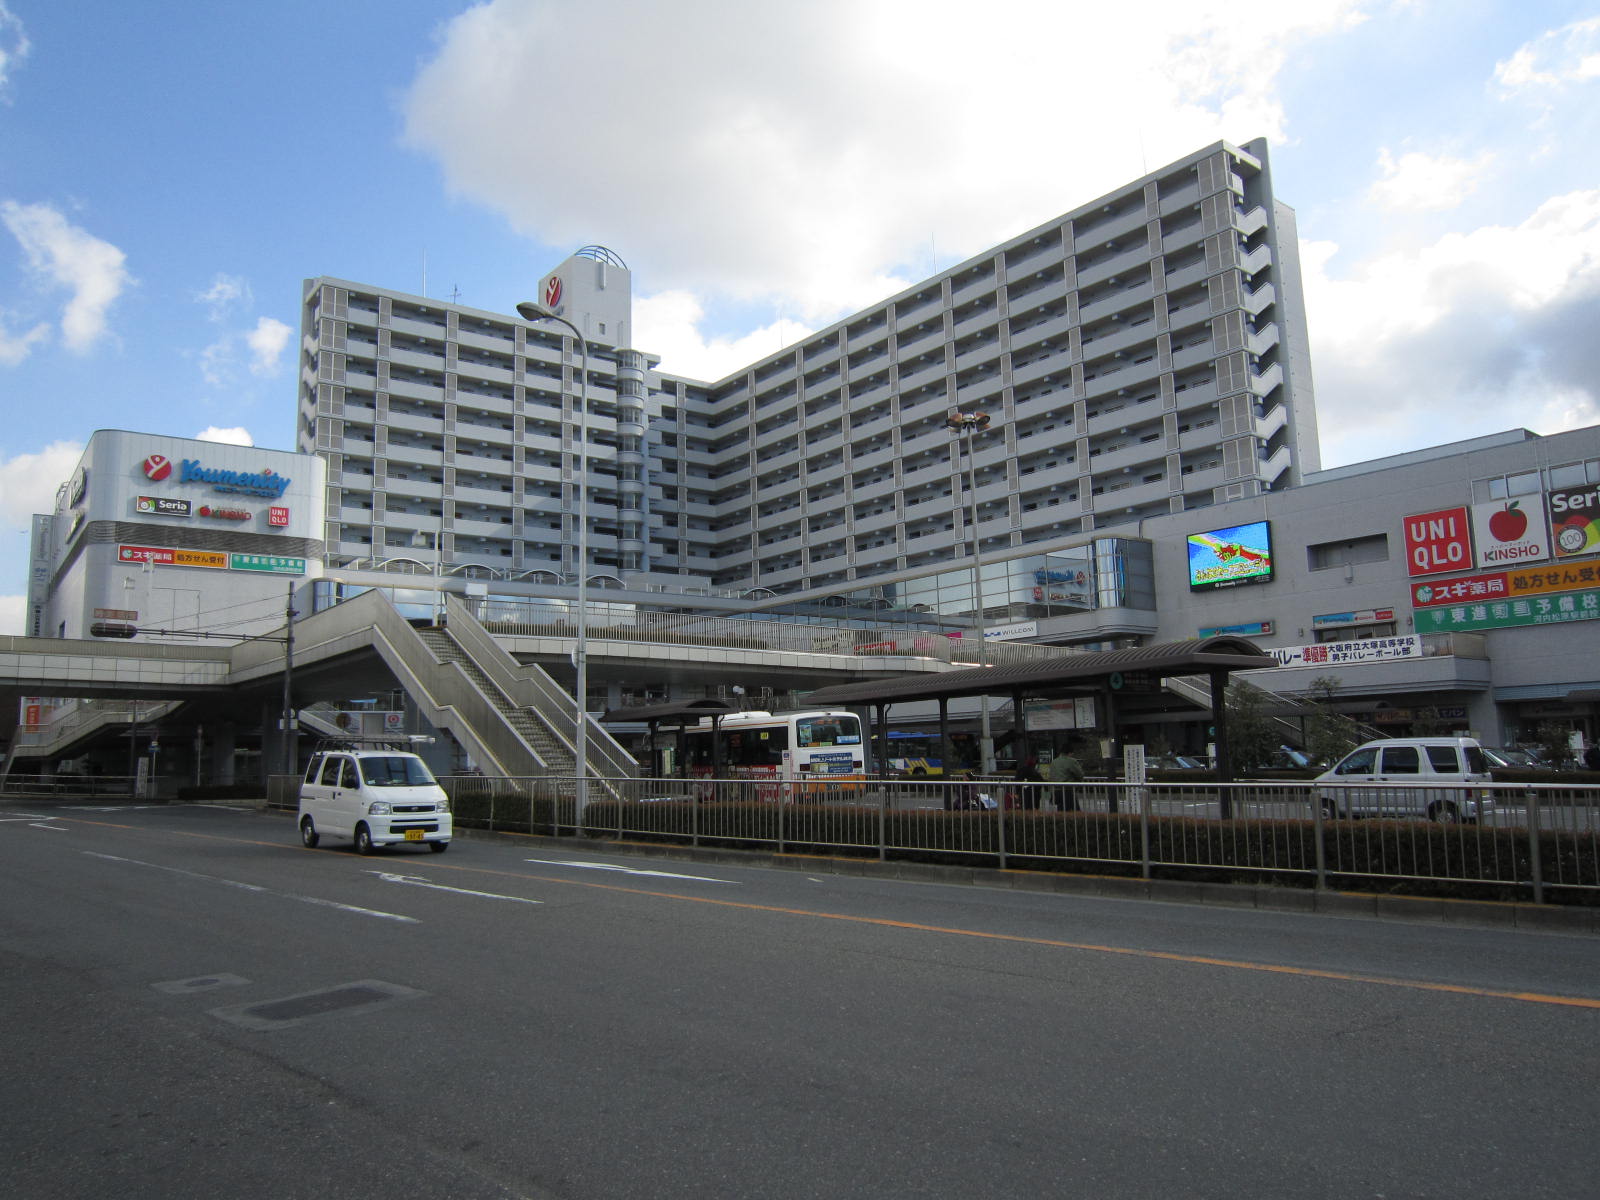 Shopping centre. Dream 254m until sanity Matsubara (shopping center)